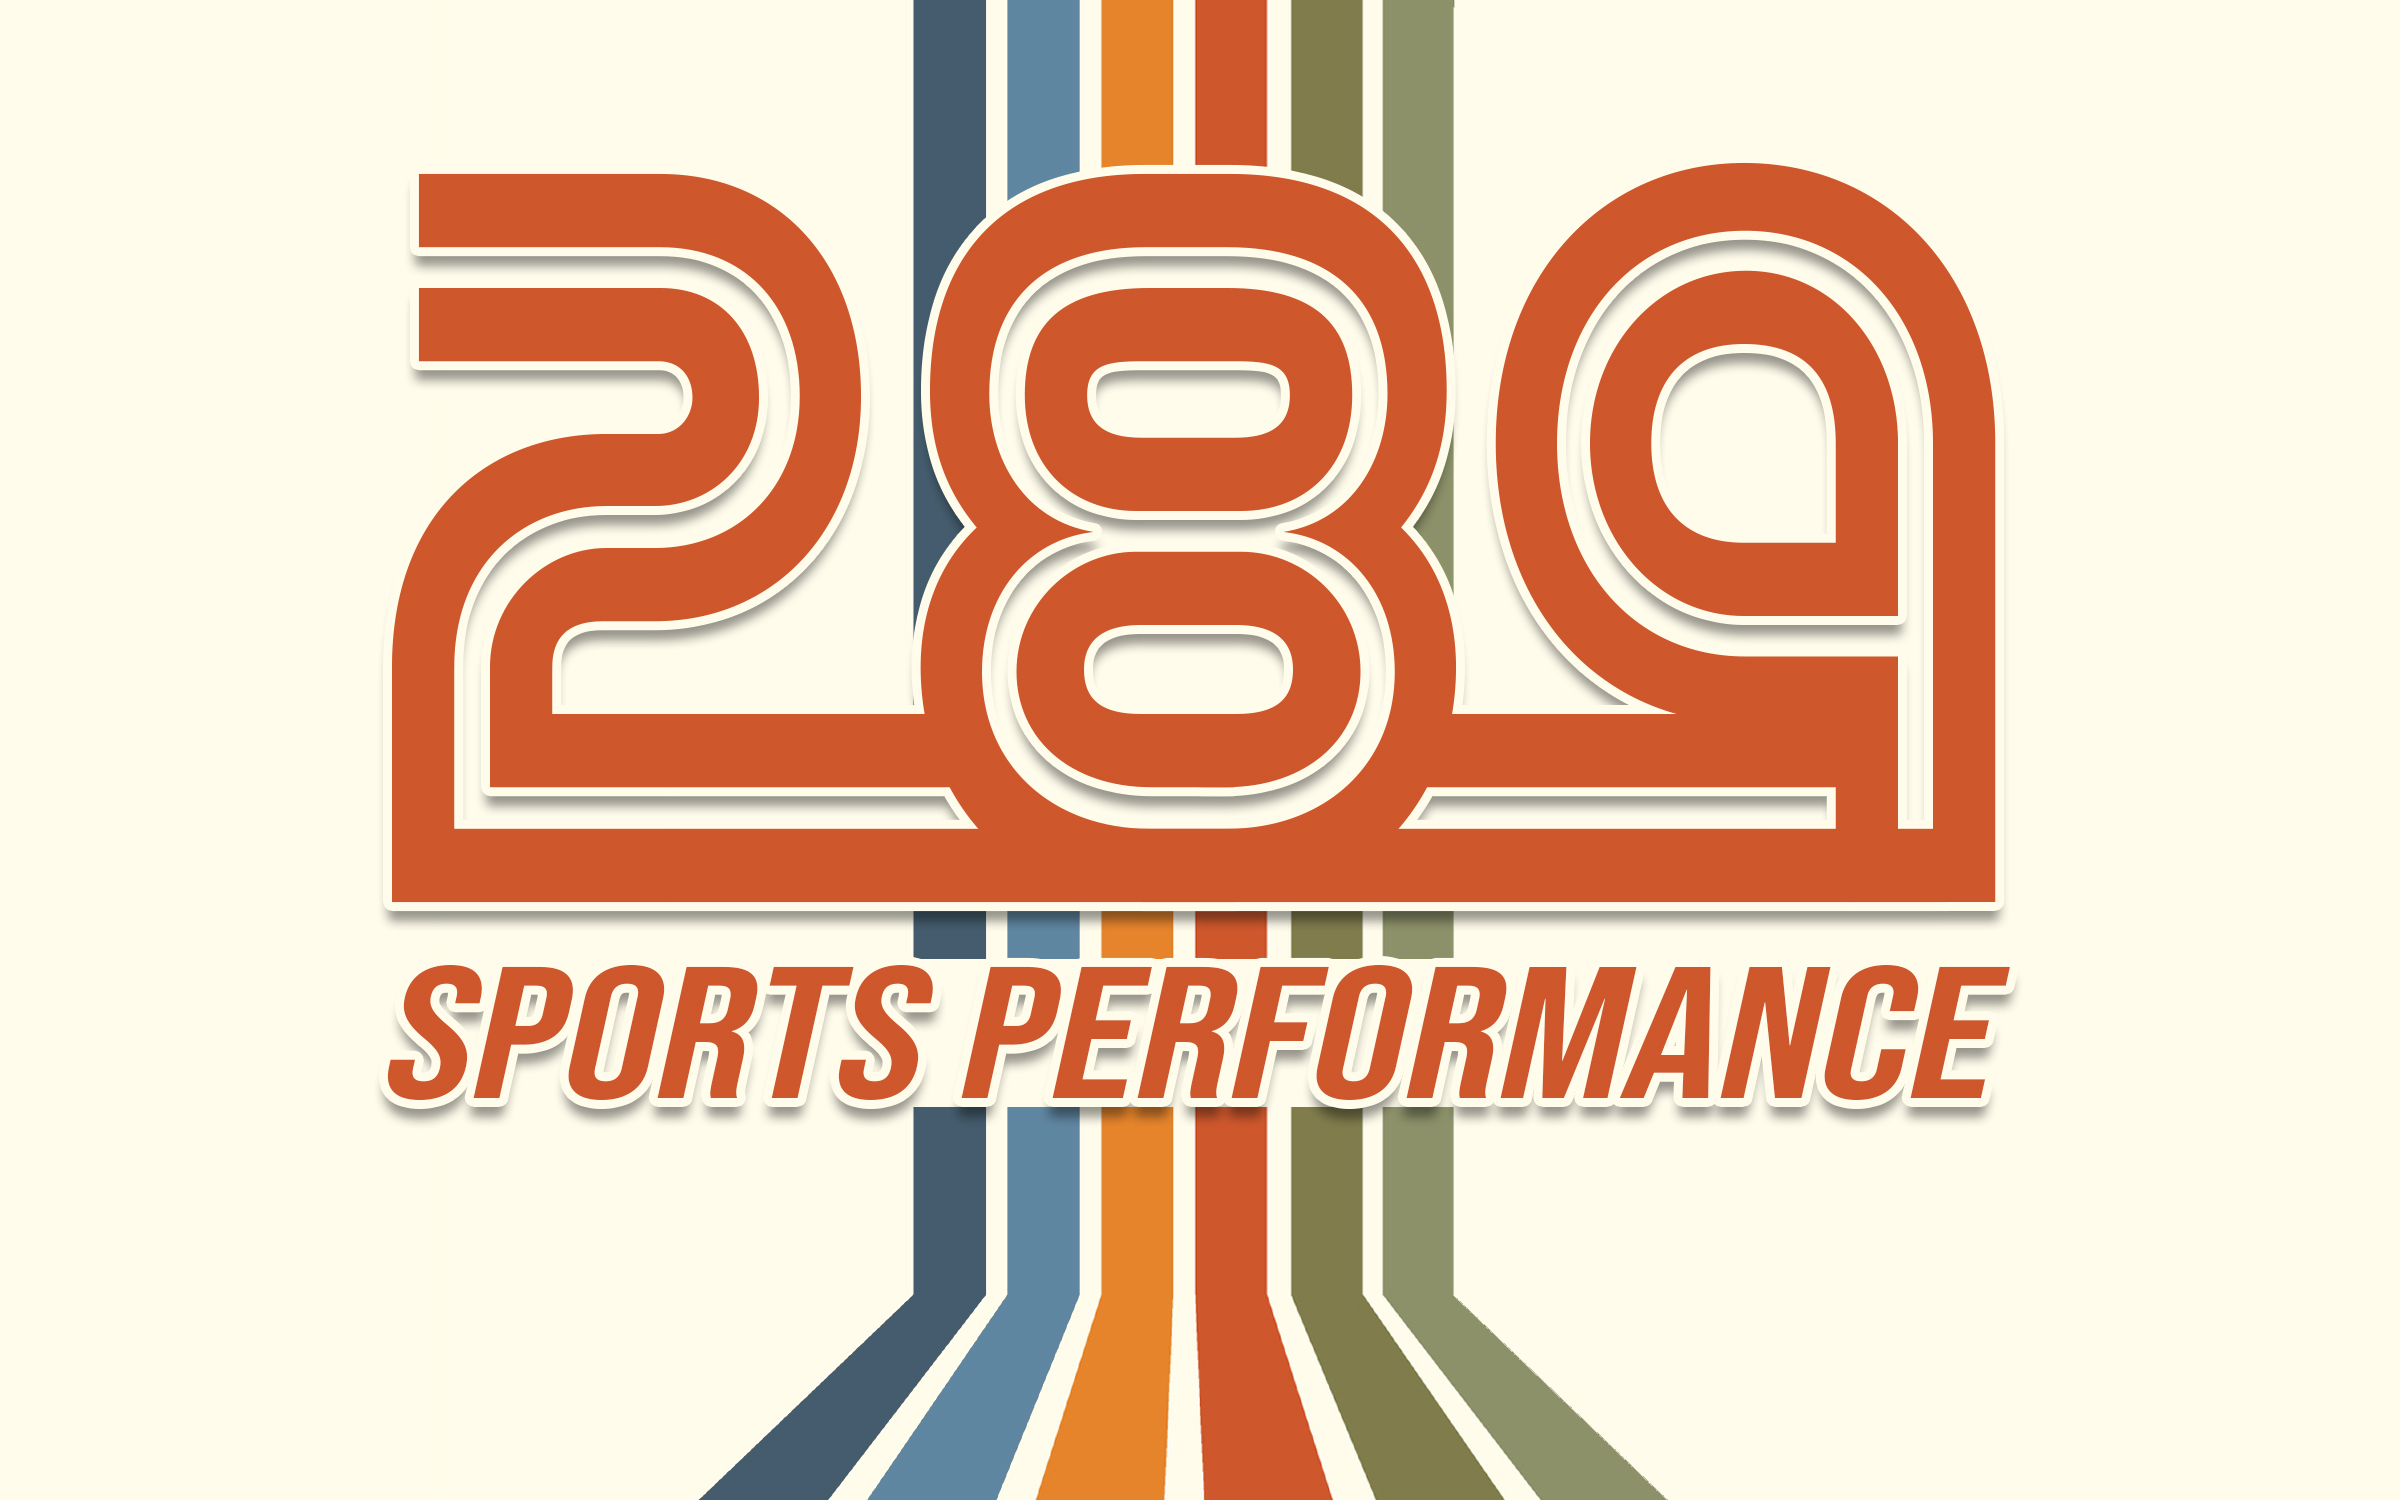 289 Sports Performance